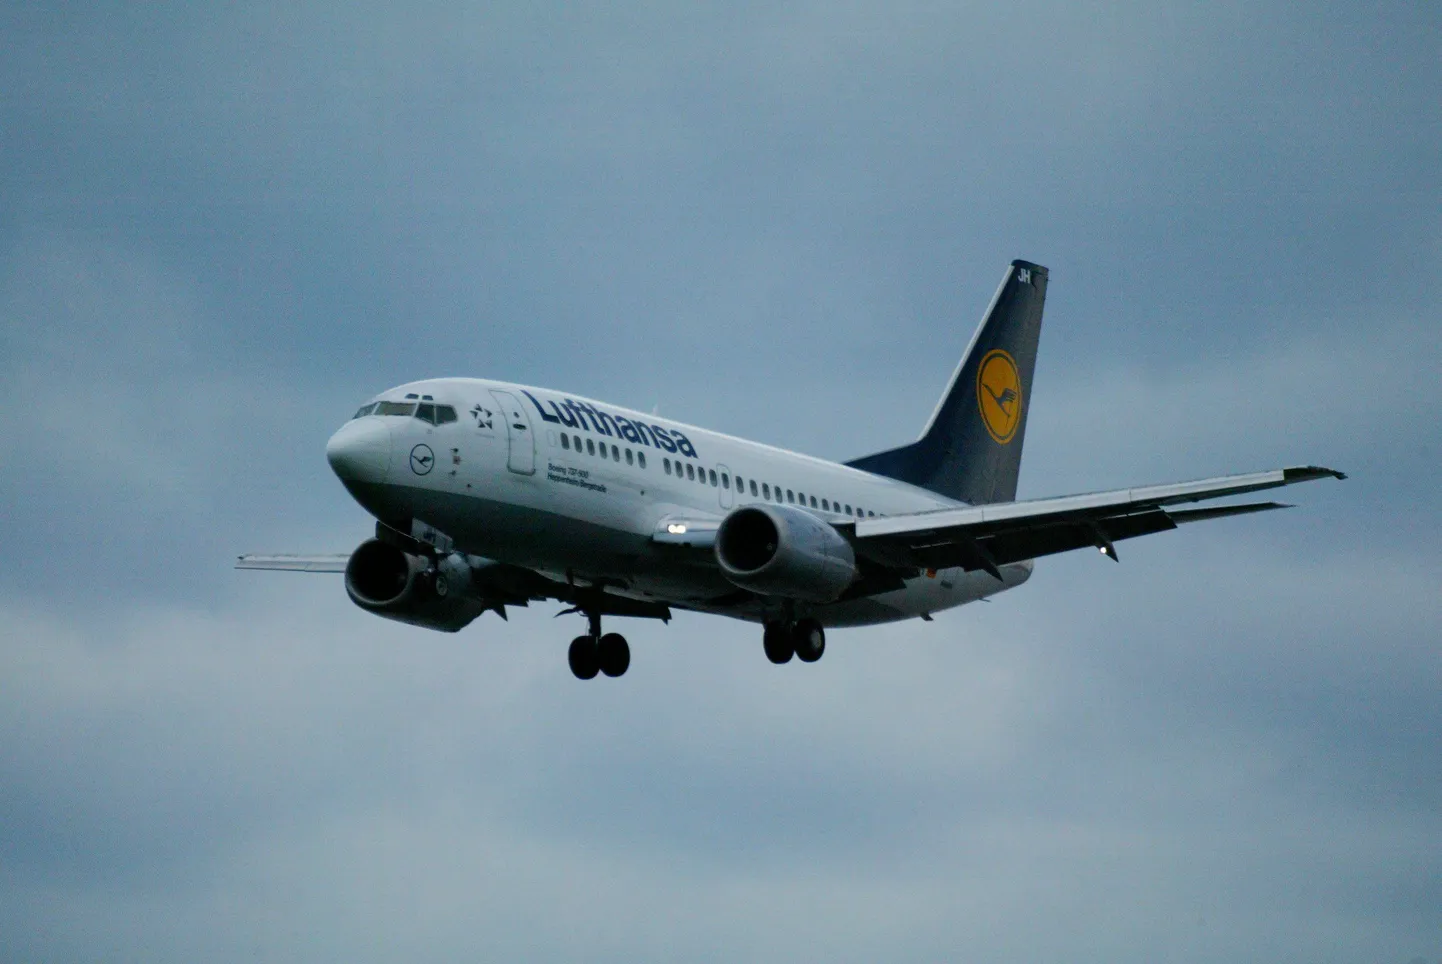 Pildil Lufthansa lennuk Boeing 737-500.